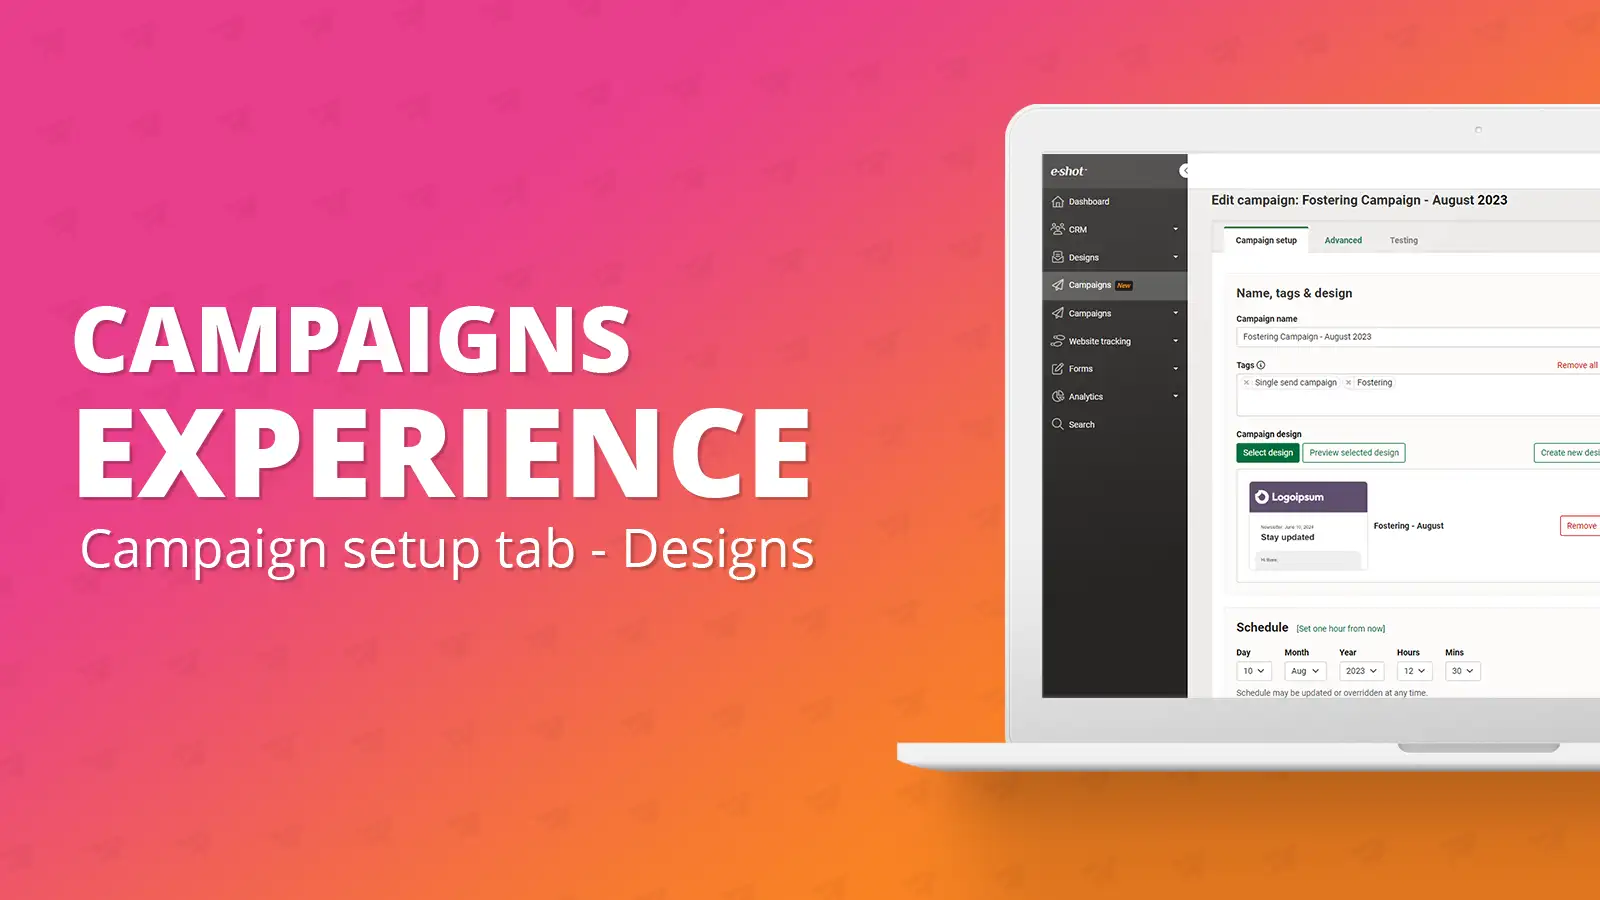 Campaign setup tab: Designs